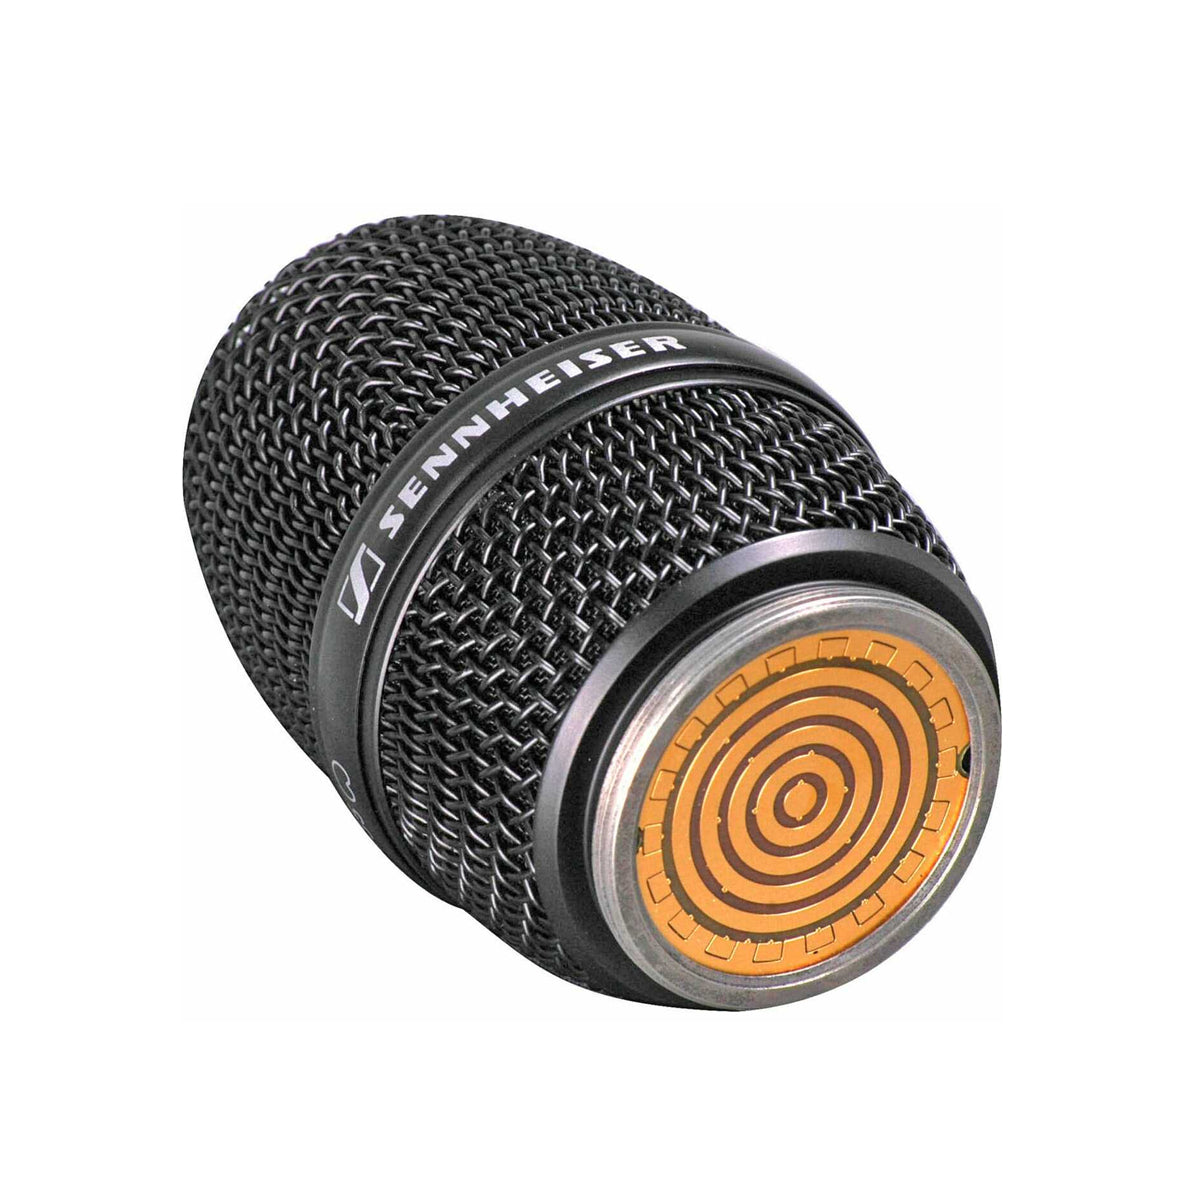 Sennheiser MMD 935-1 BK Dynamic Cardioid Microphone Capsule Black